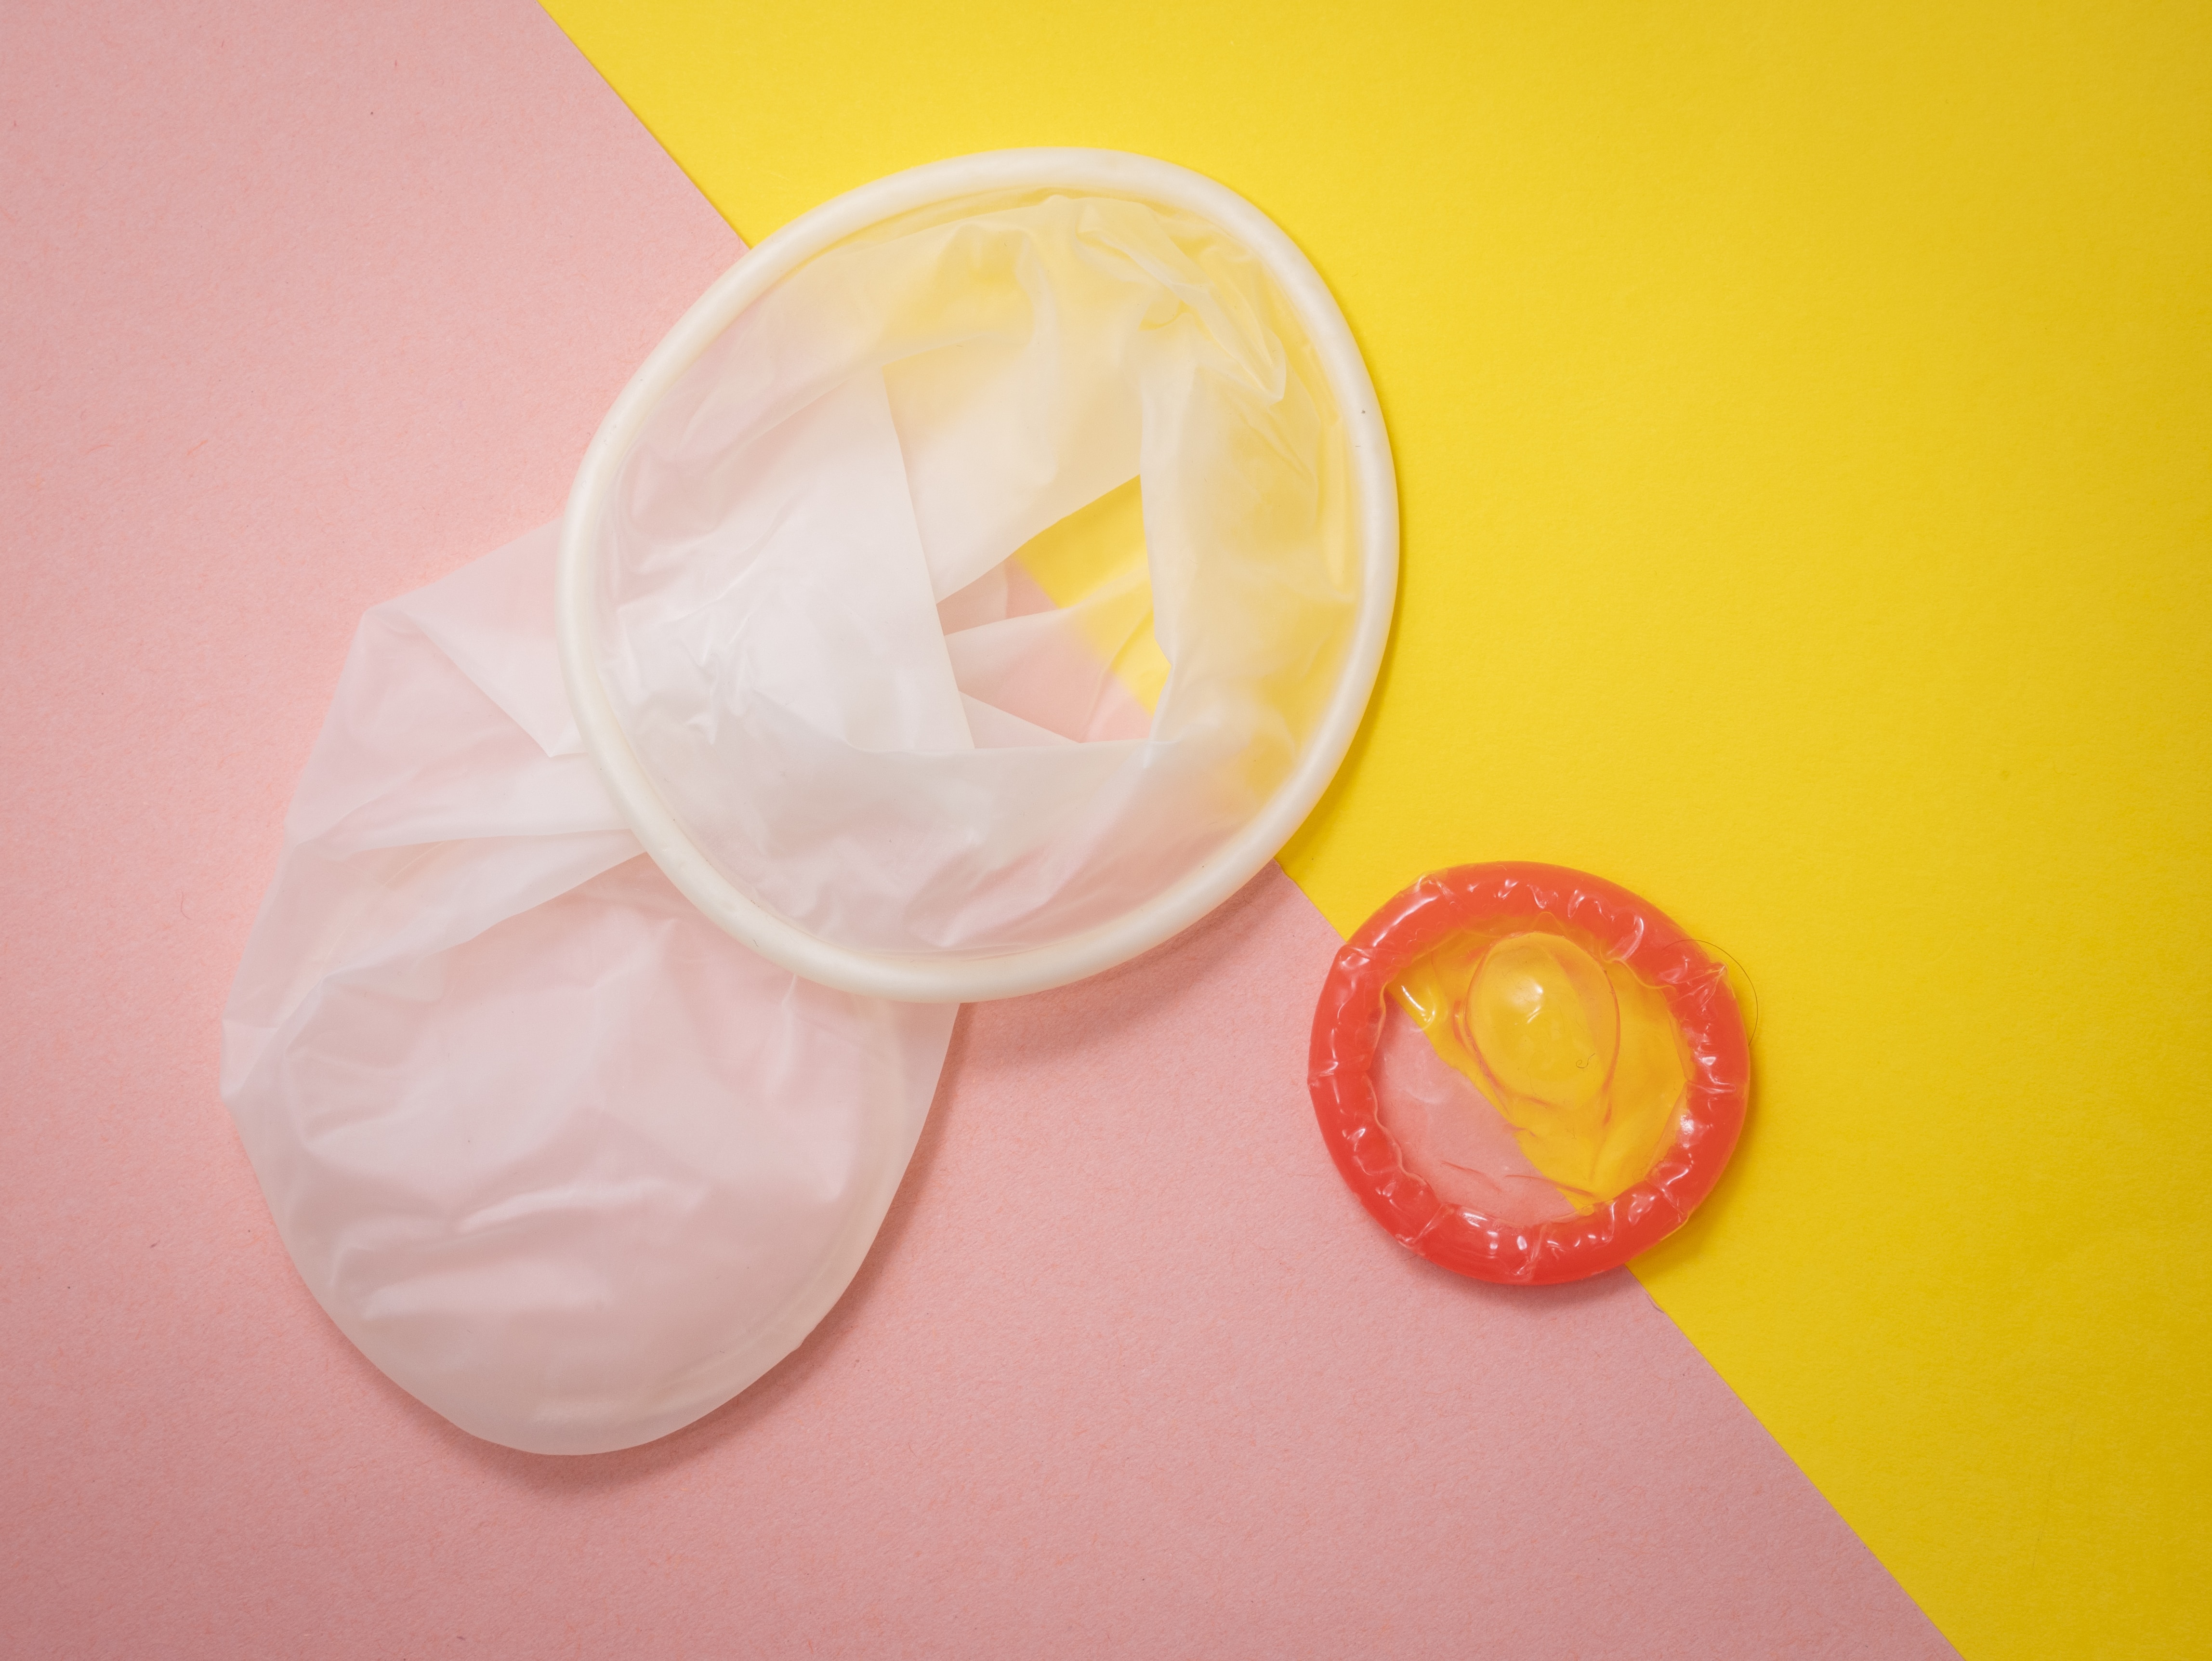 Female and Male condoms